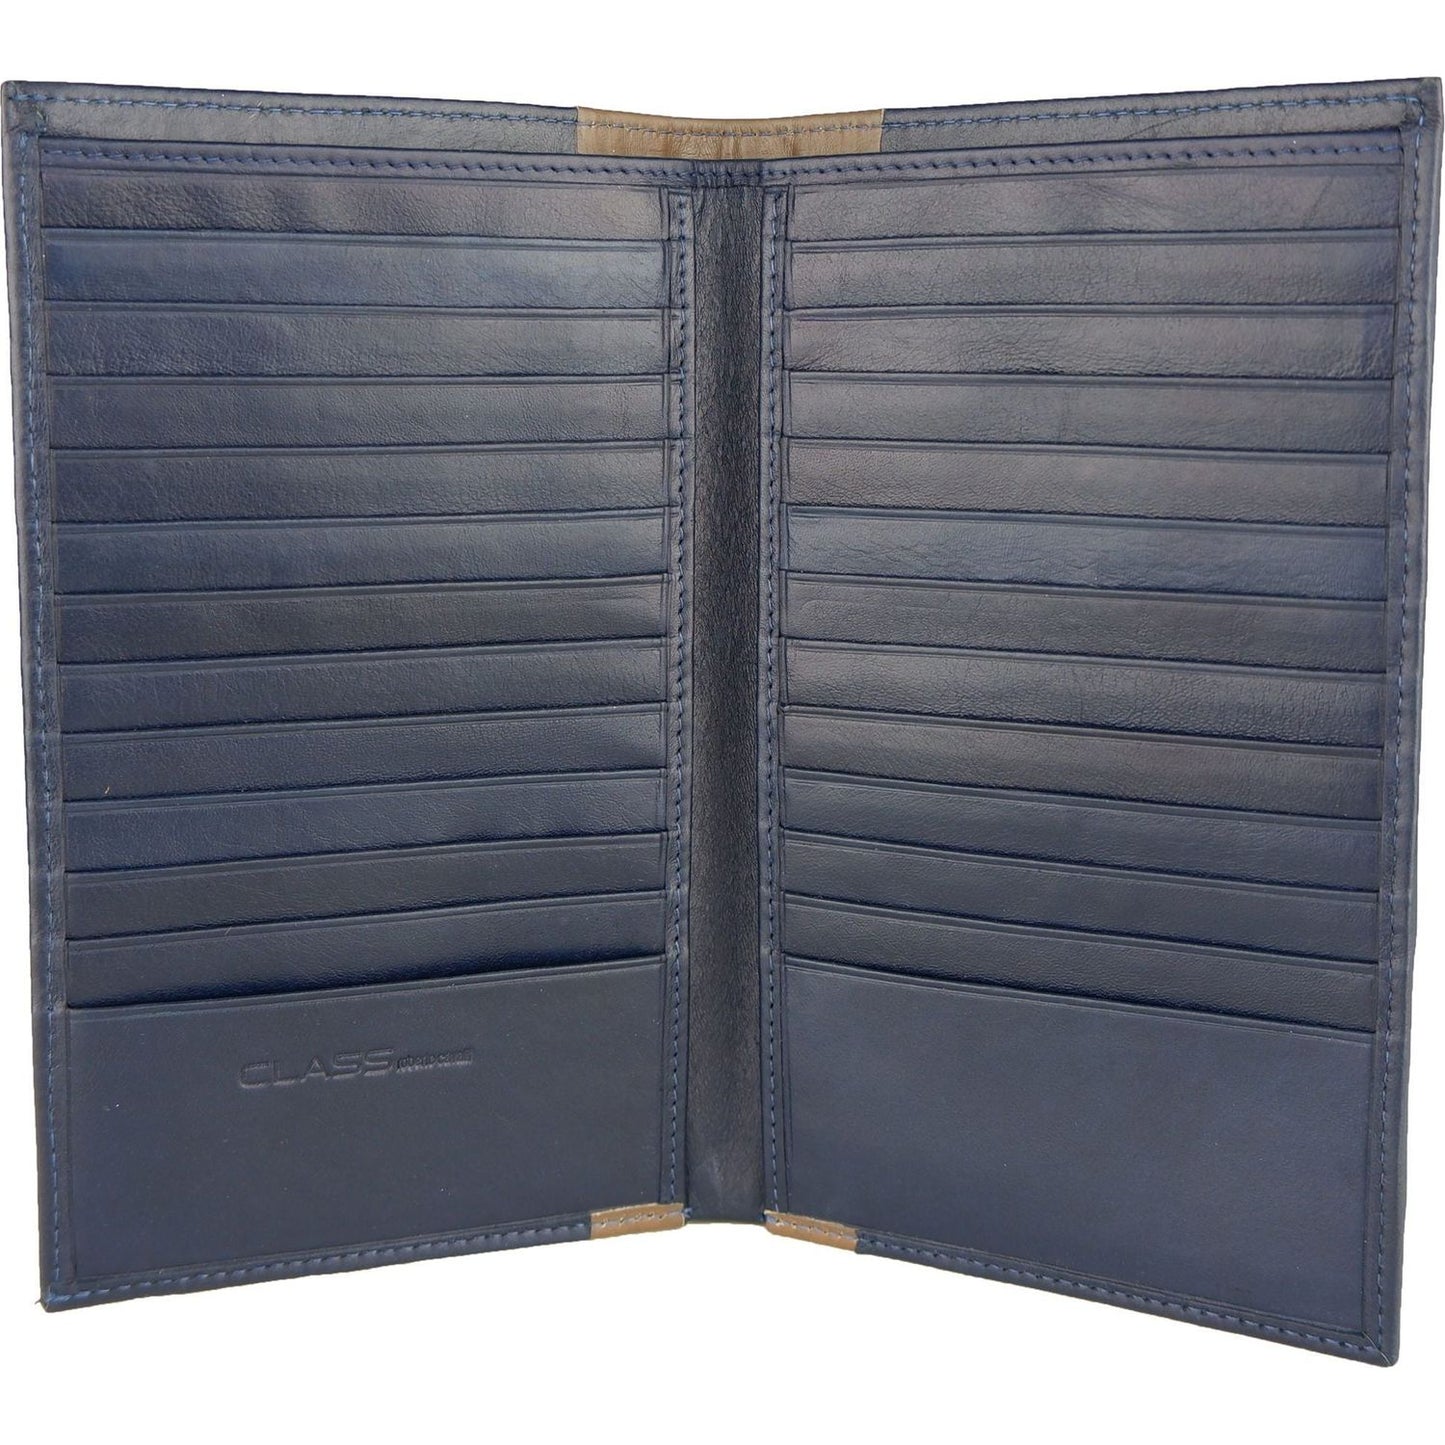 Cavalli Class Elegant Blue and Beige Leather Wallet ar-cavalli-class-wallet MAN WALLETS